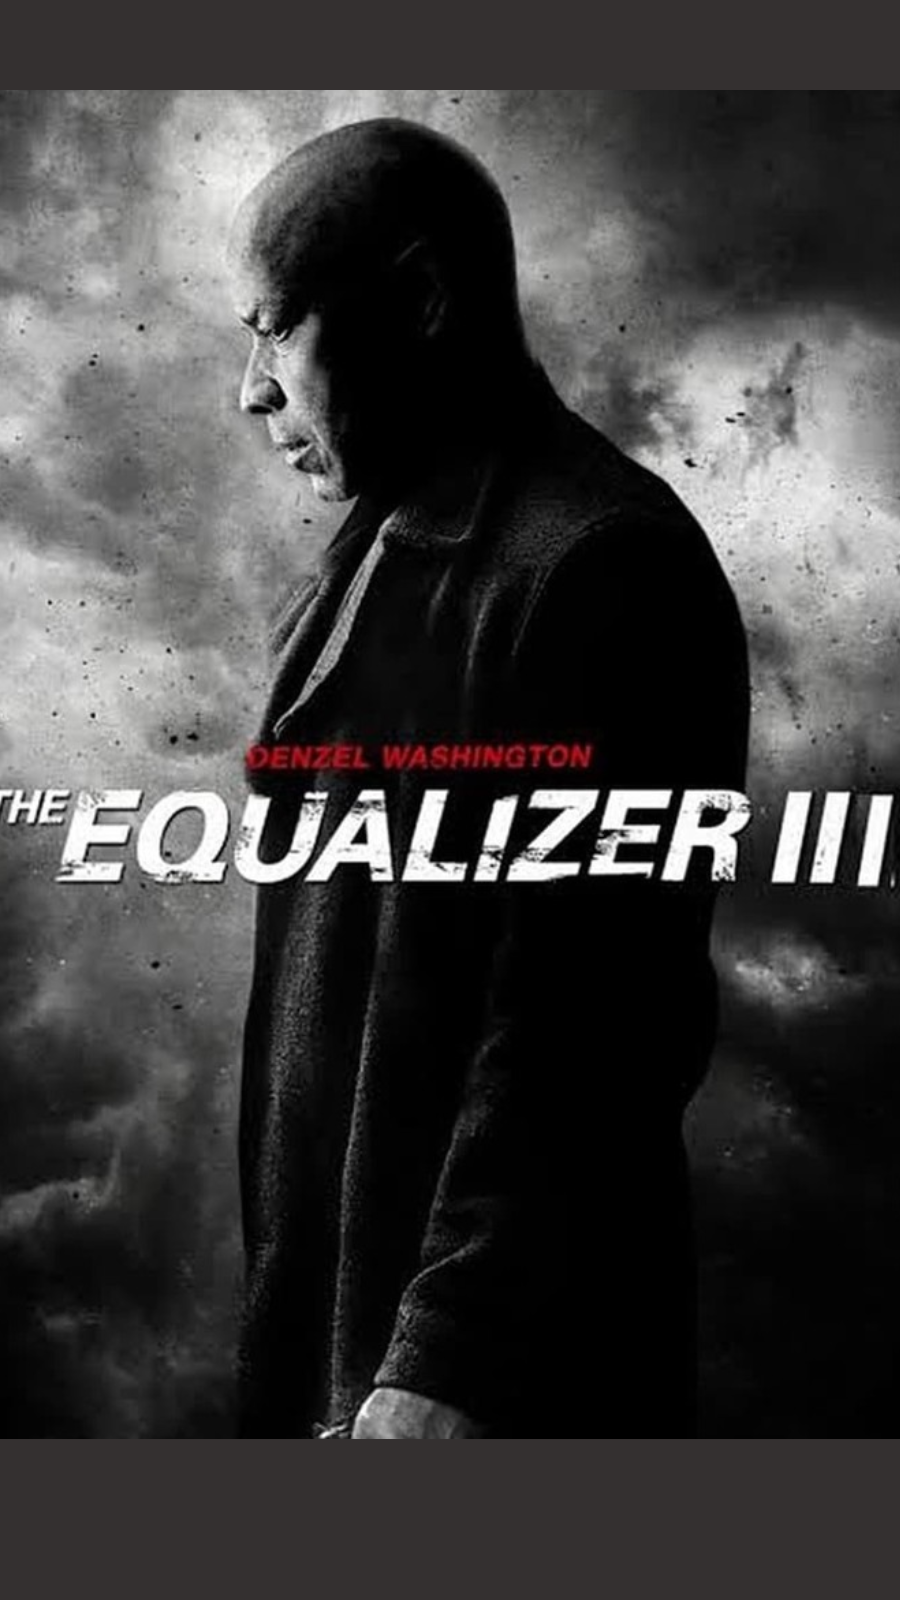 The Equalizer 3 News